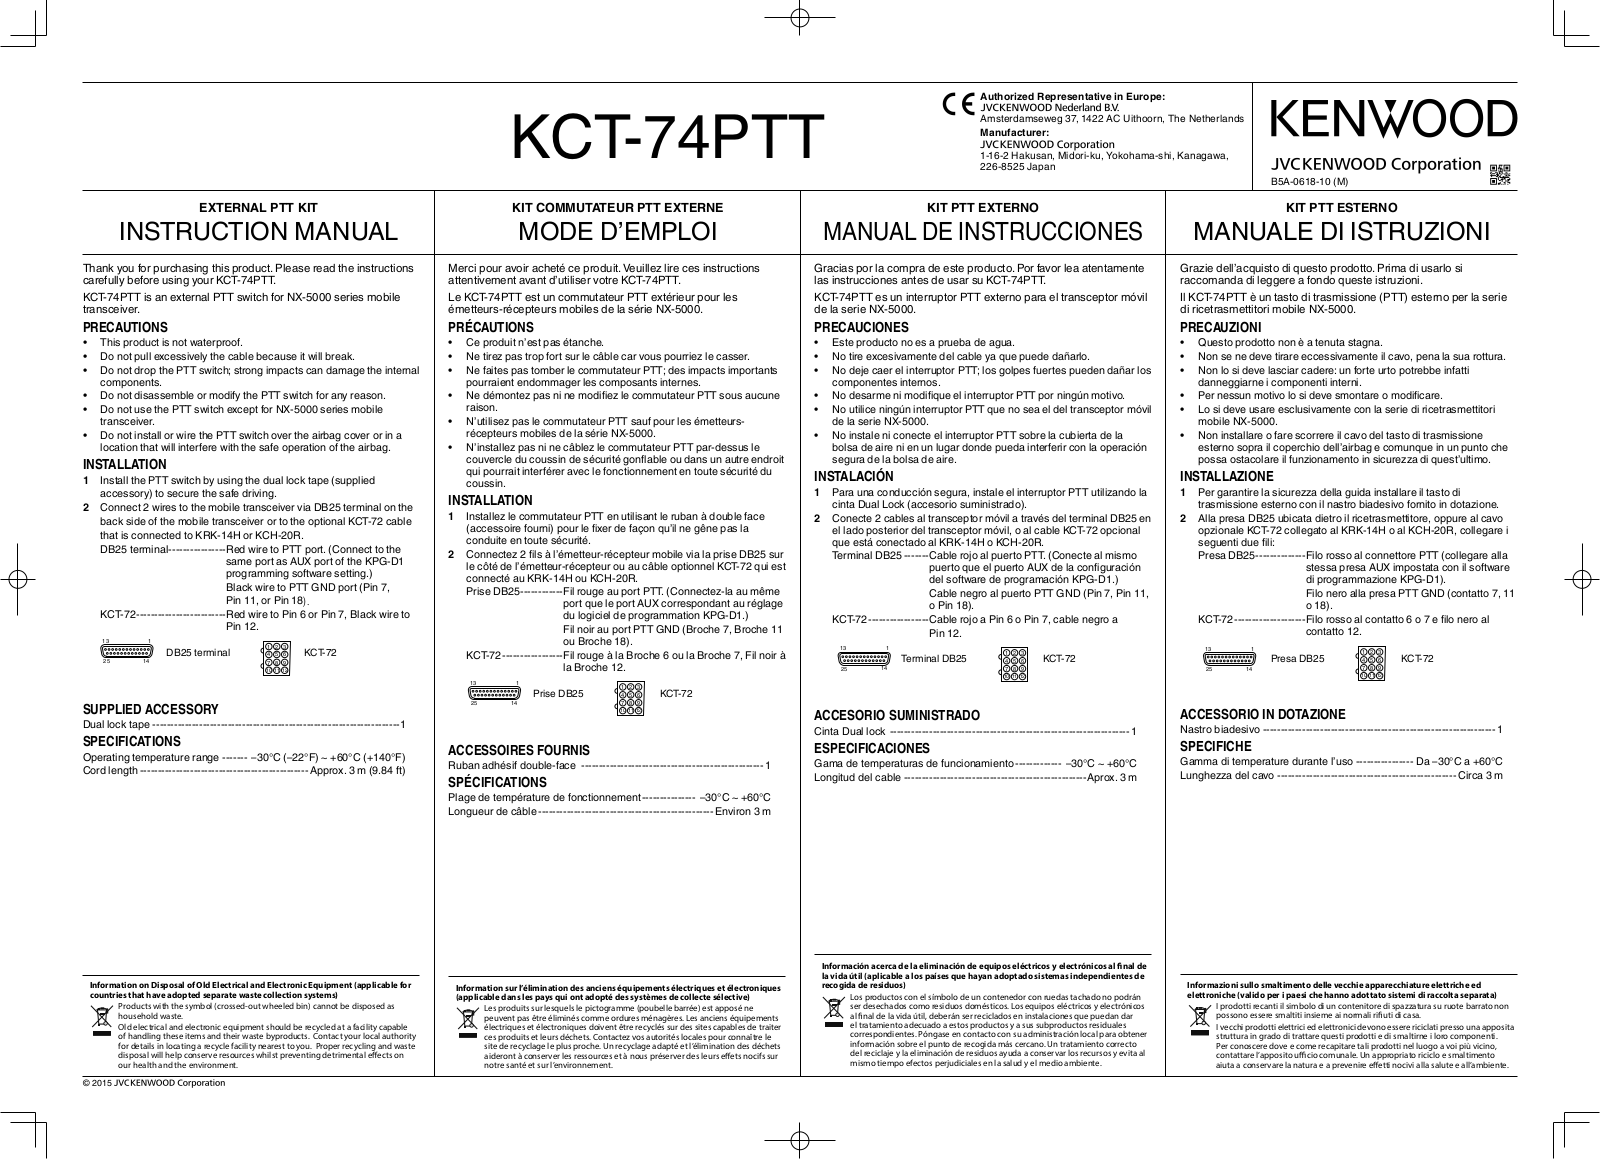 Kenwood KCT-74PTT Operation Manual